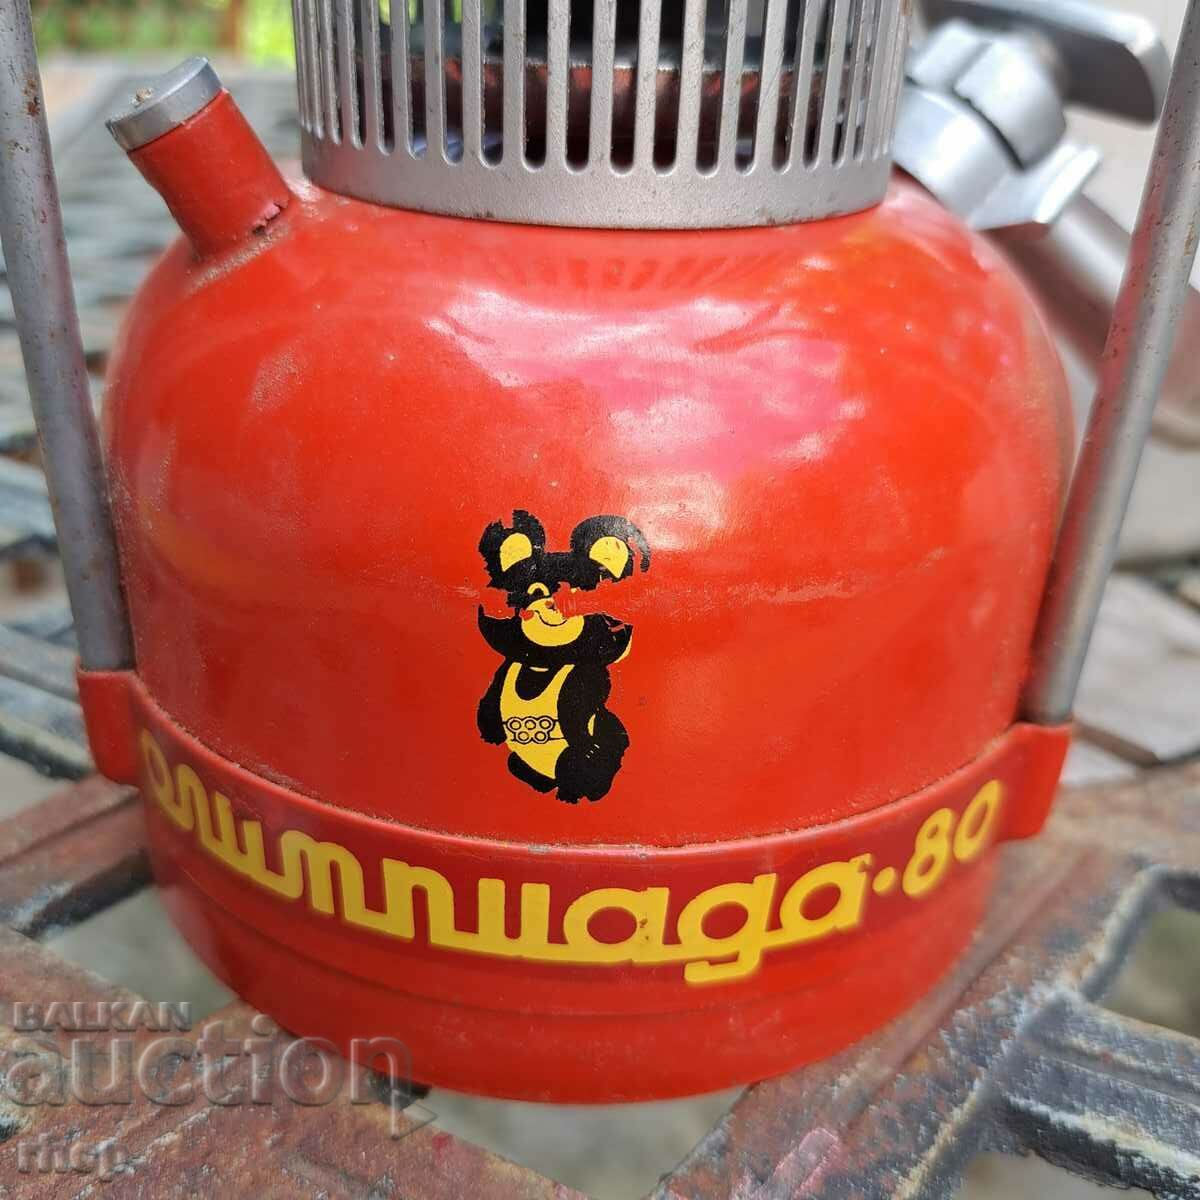 Bumblebee 1 παλιά Σοβιετική σόμπα βενζίνης Olimpiysk Σόμπα primus